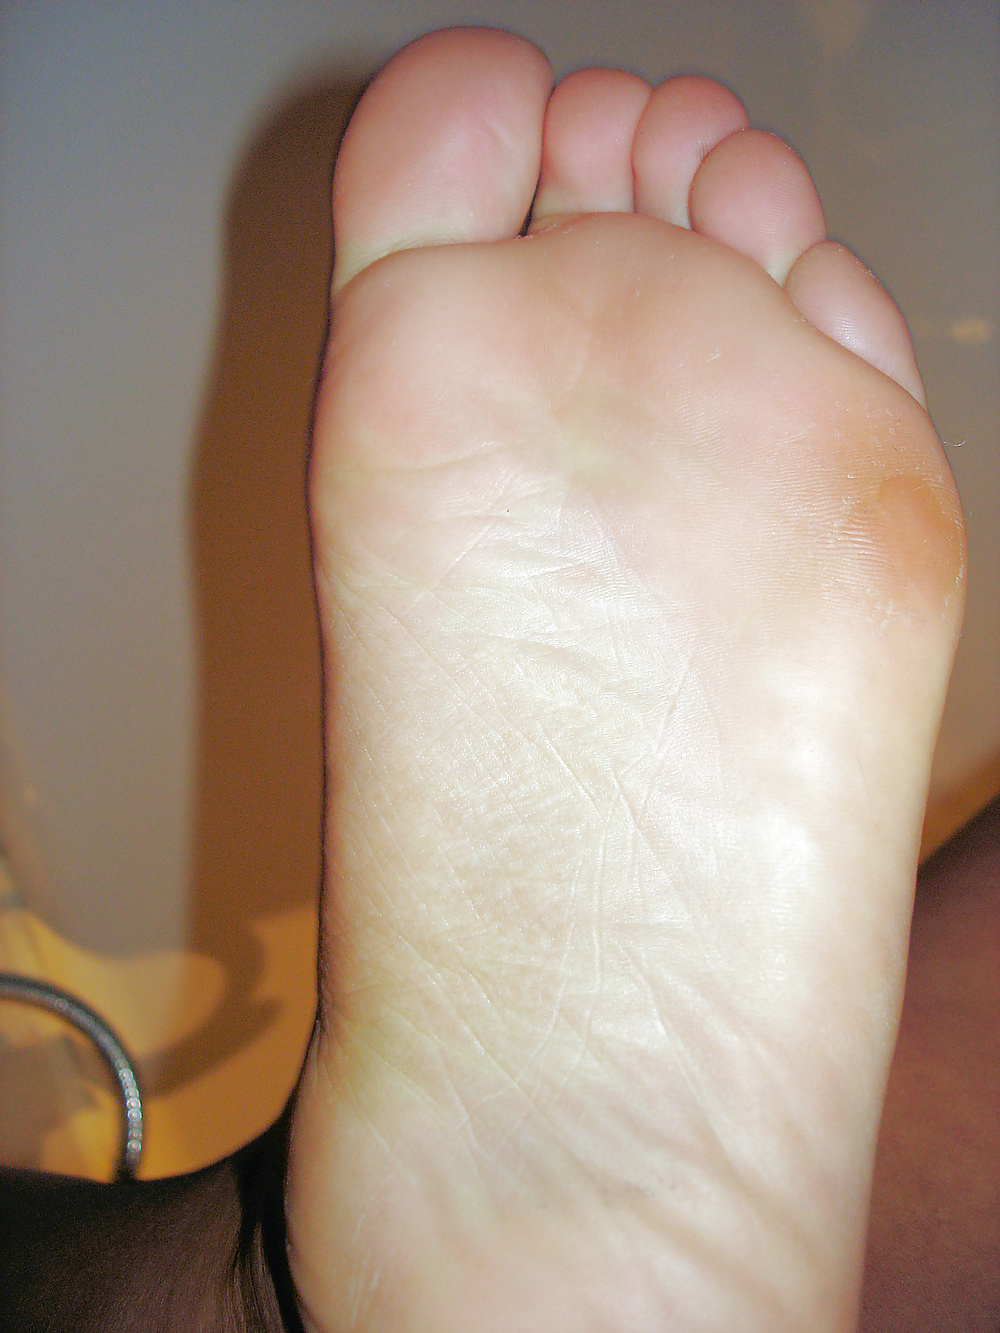 All kinds of hot female feet #32283636